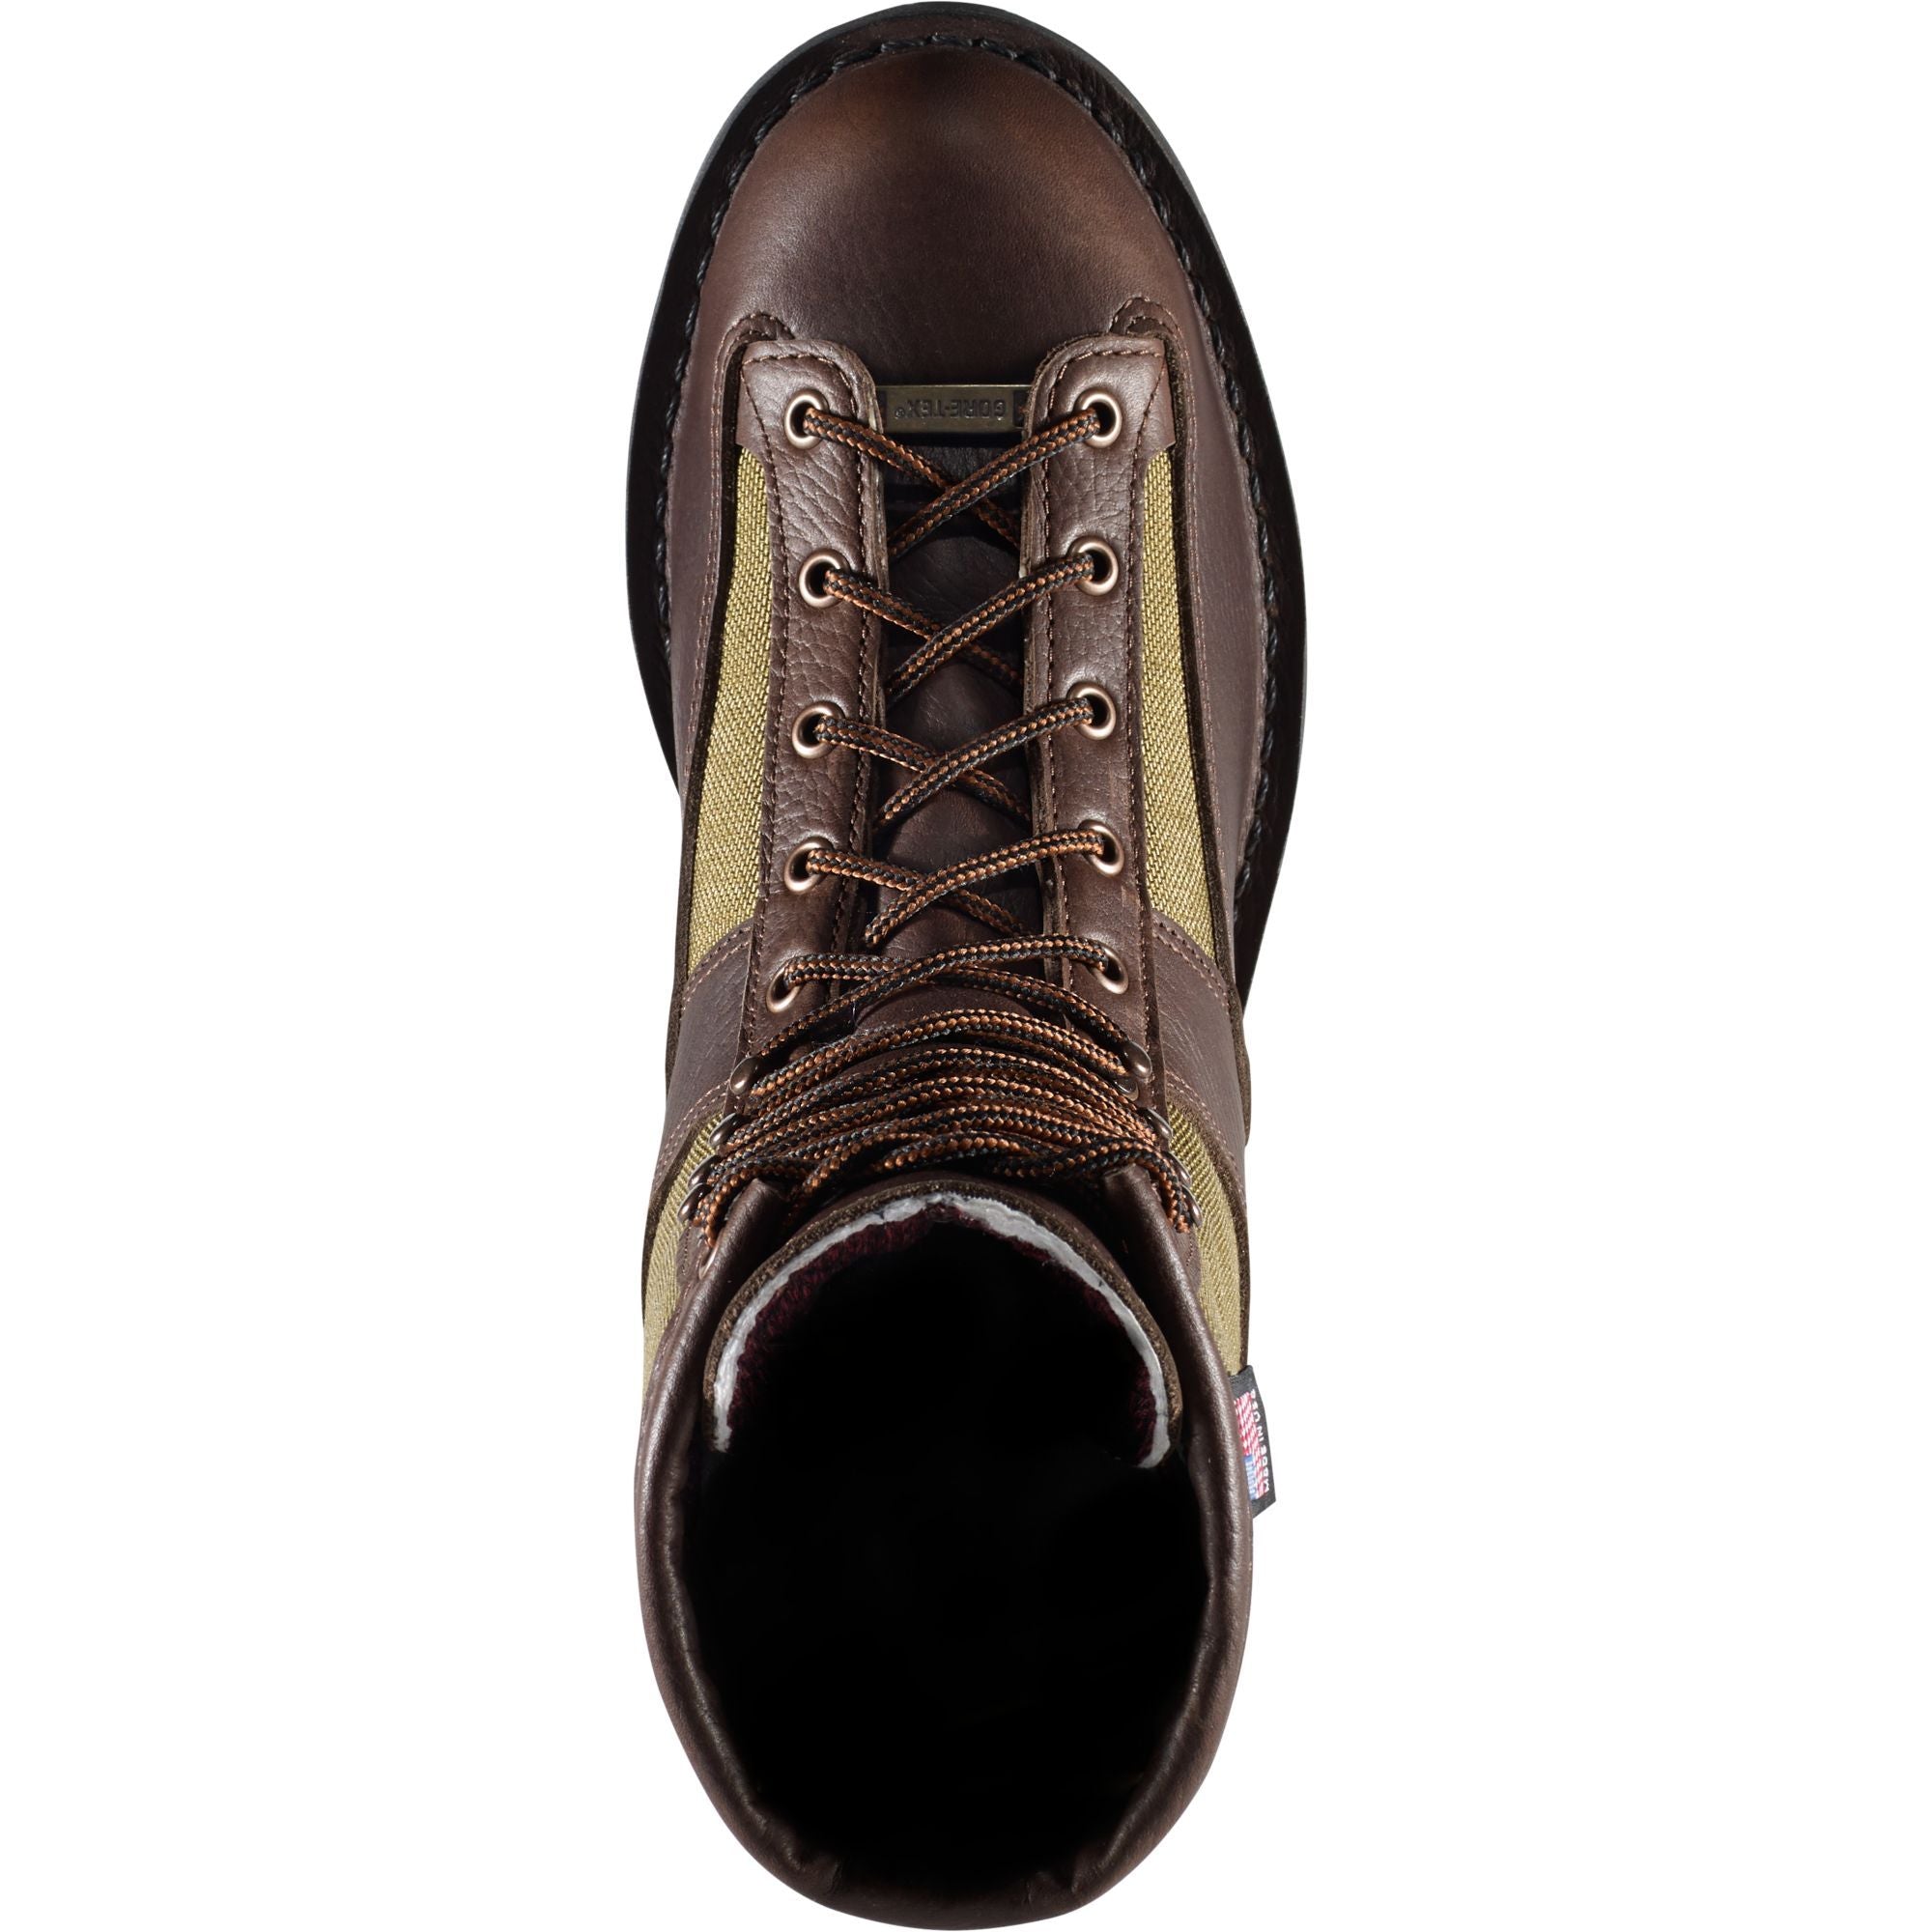 Danner Men's Sierra 8" USA Made Insulated WP Hunt Boot - Brown - 63100  - Overlook Boots